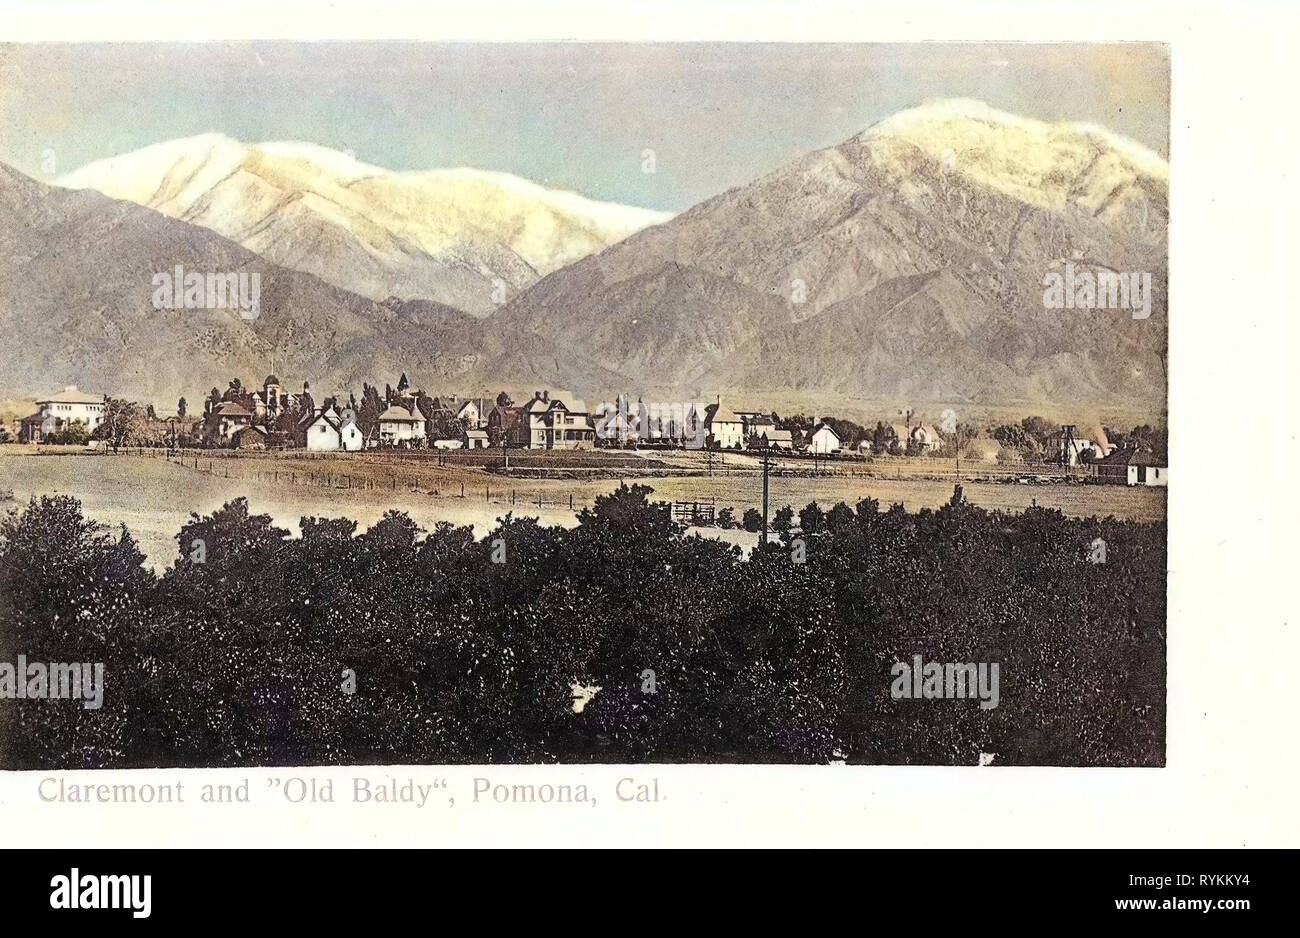 Mount San Antonio, Buildings in Pomona, California, 1903, Pomona, Cal., Claremont and Old Baldy', United States of America Stock Photo